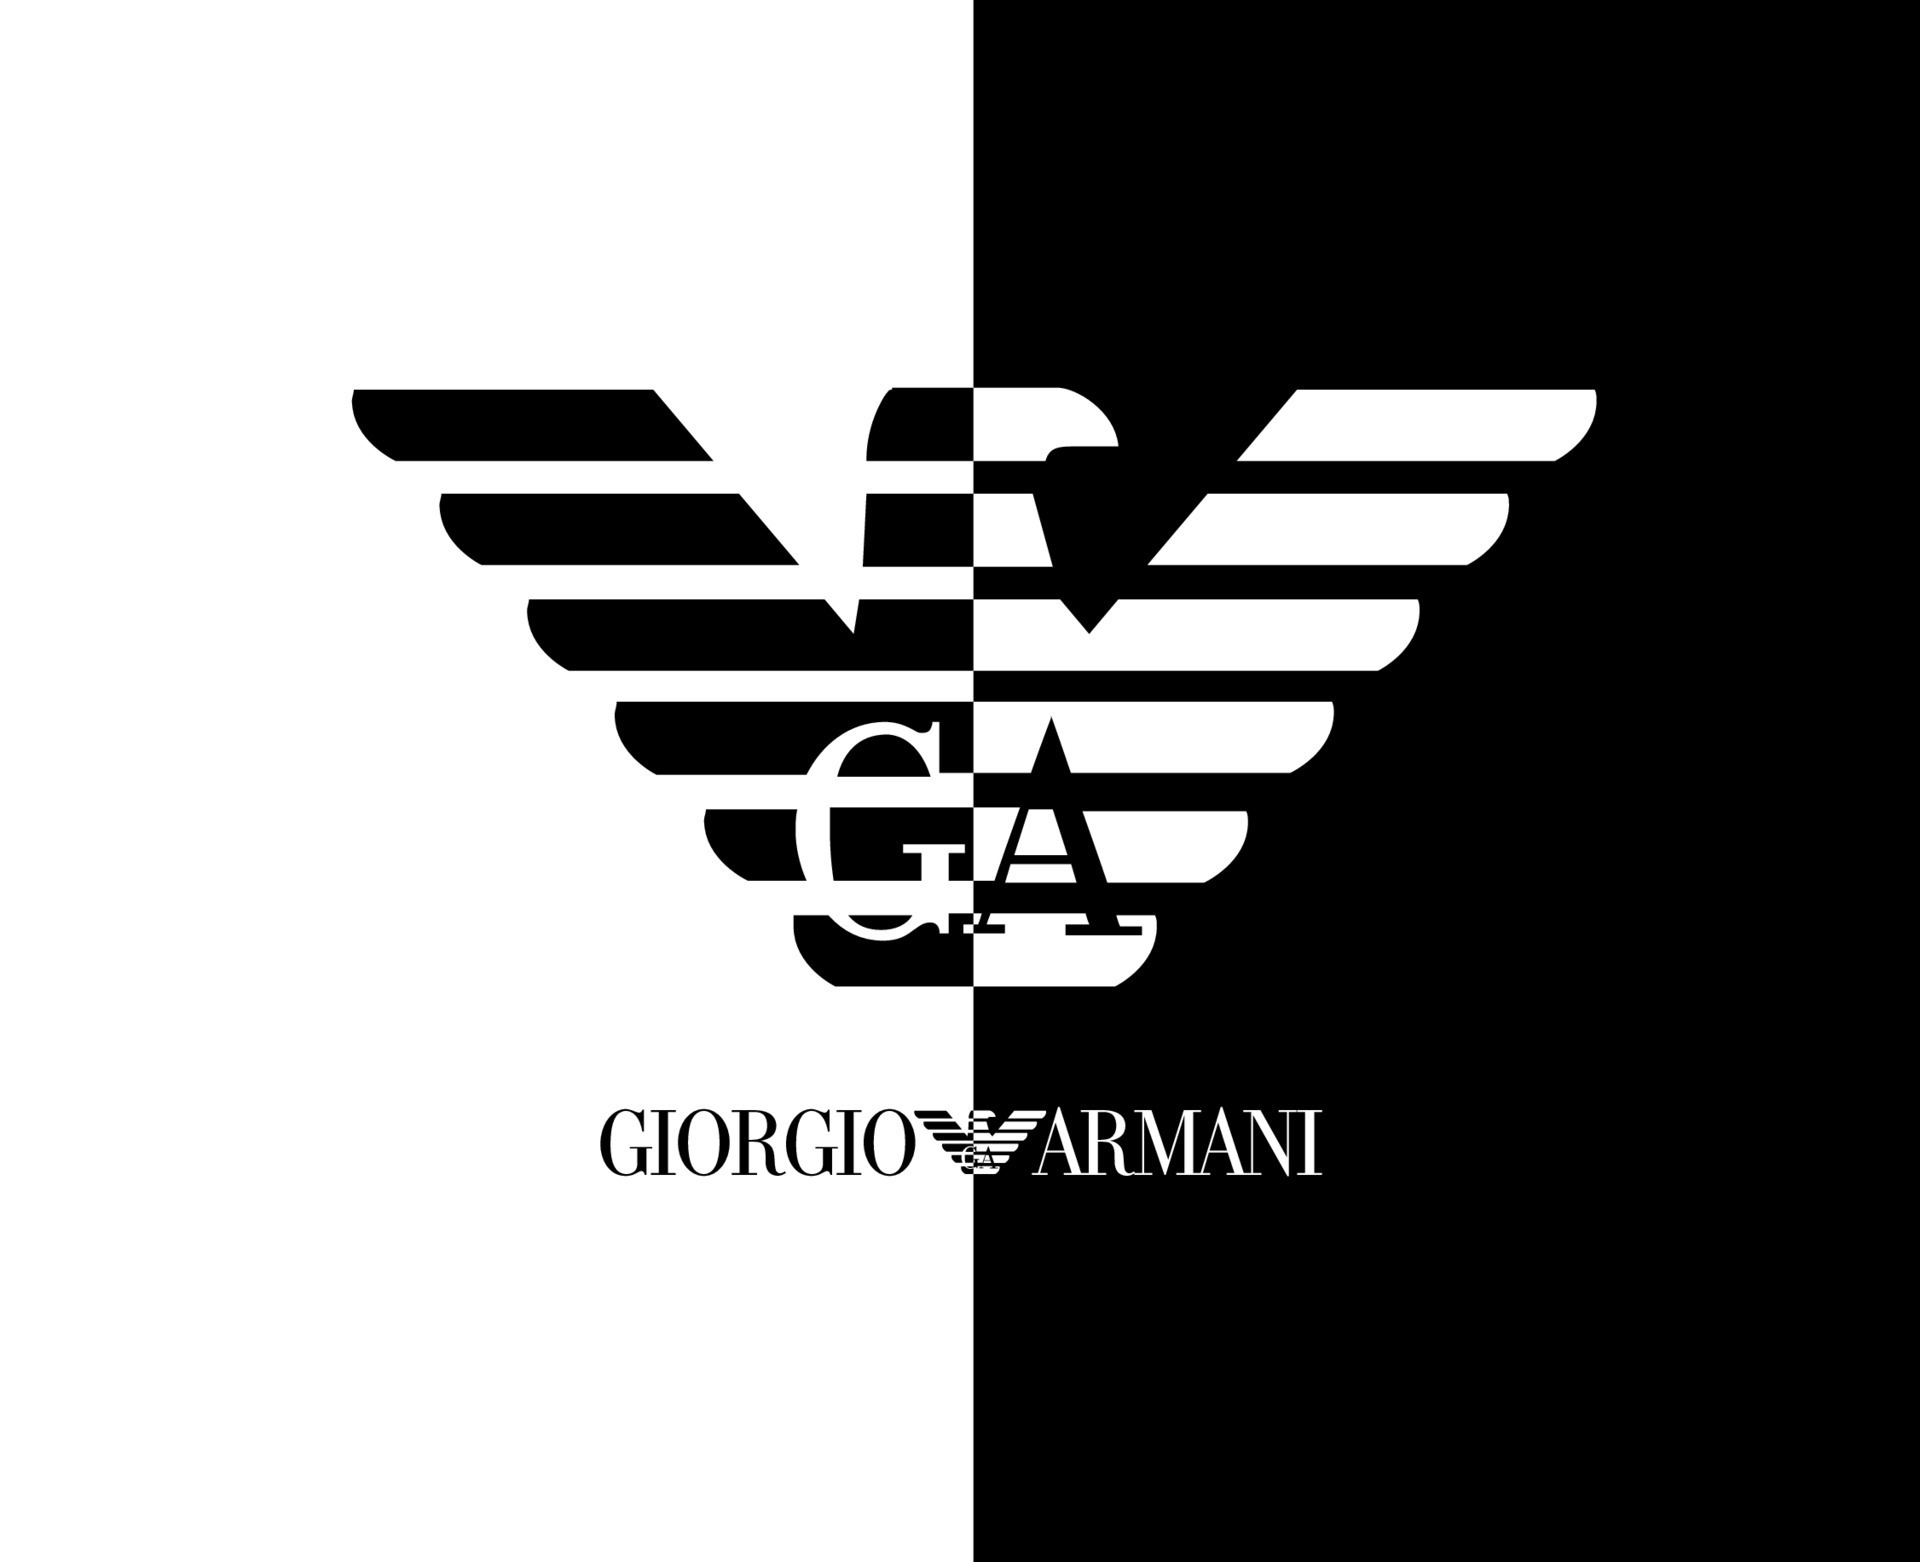 Giorgio Armani Brand Clothes Symbol Logo With Name Black And White Design  Fashion Vector Illustration 23585913 Vector Art at Vecteezy